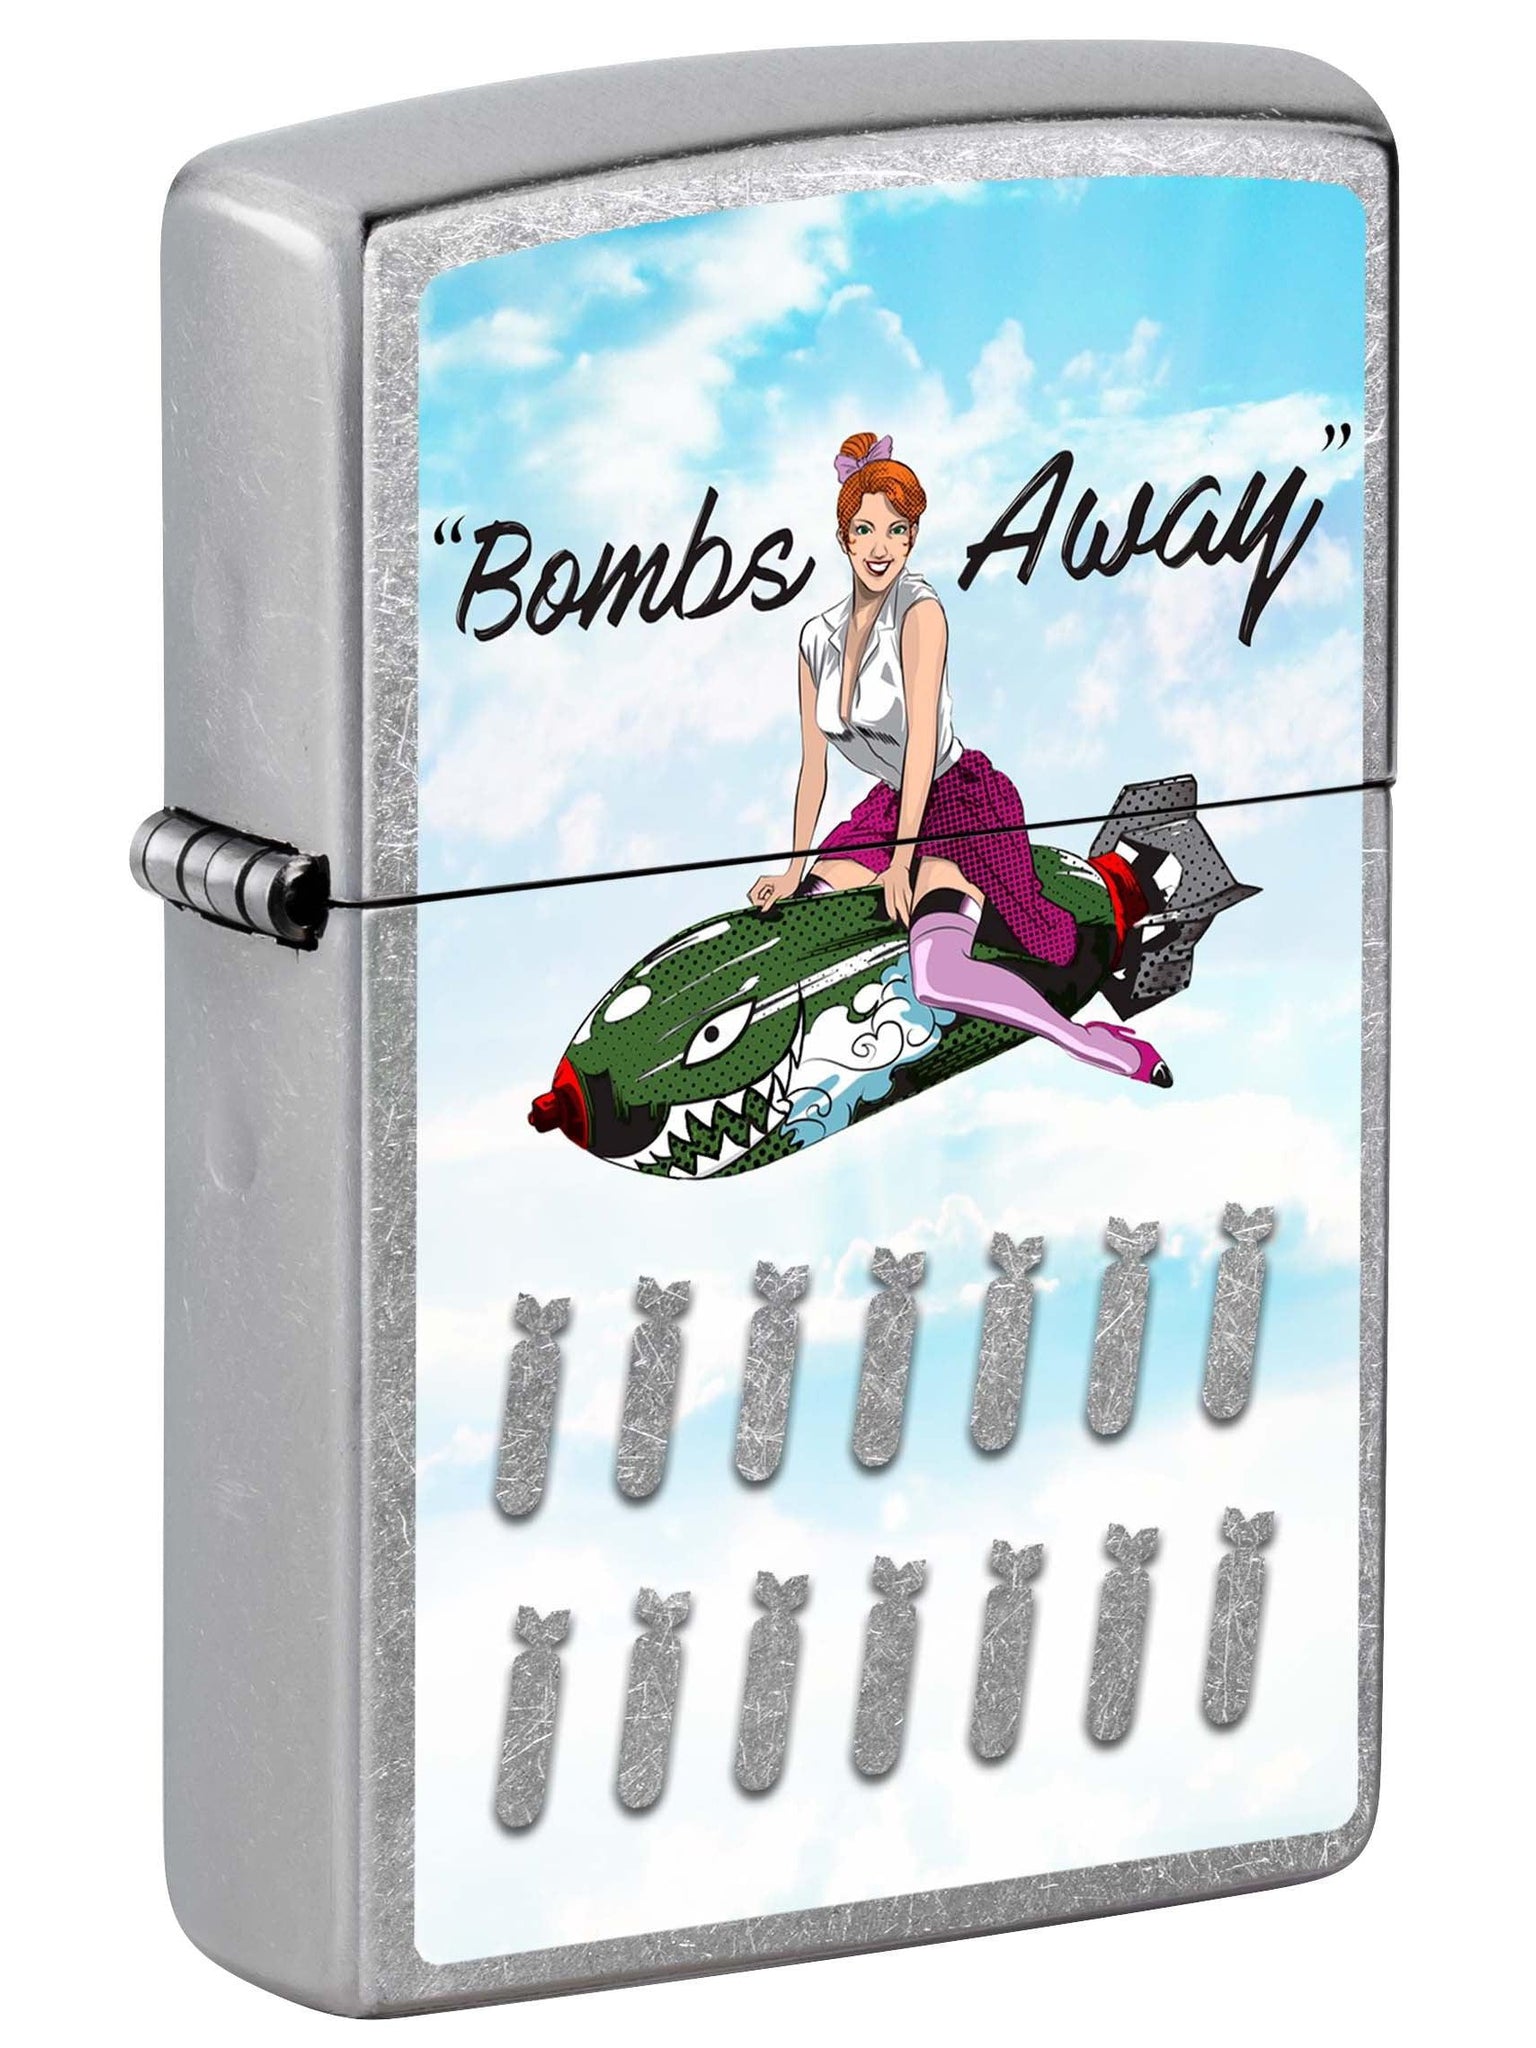 Zippo Lighter: Vintage Patriotic Pin-Up Girl, Bombs Away - Street Chrome 81109